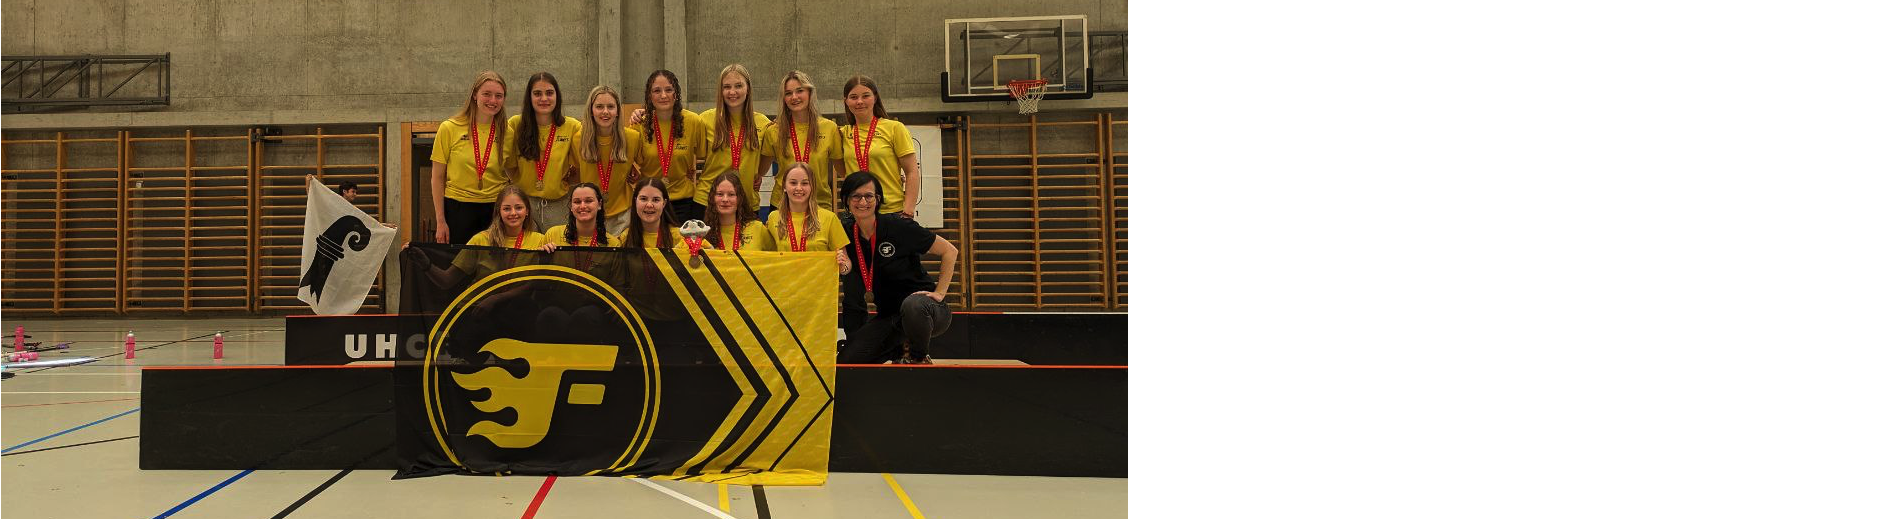 A-Juniorinnen gewinnen erneut die Bronzemedaille an der Schweizermeisterschaft!